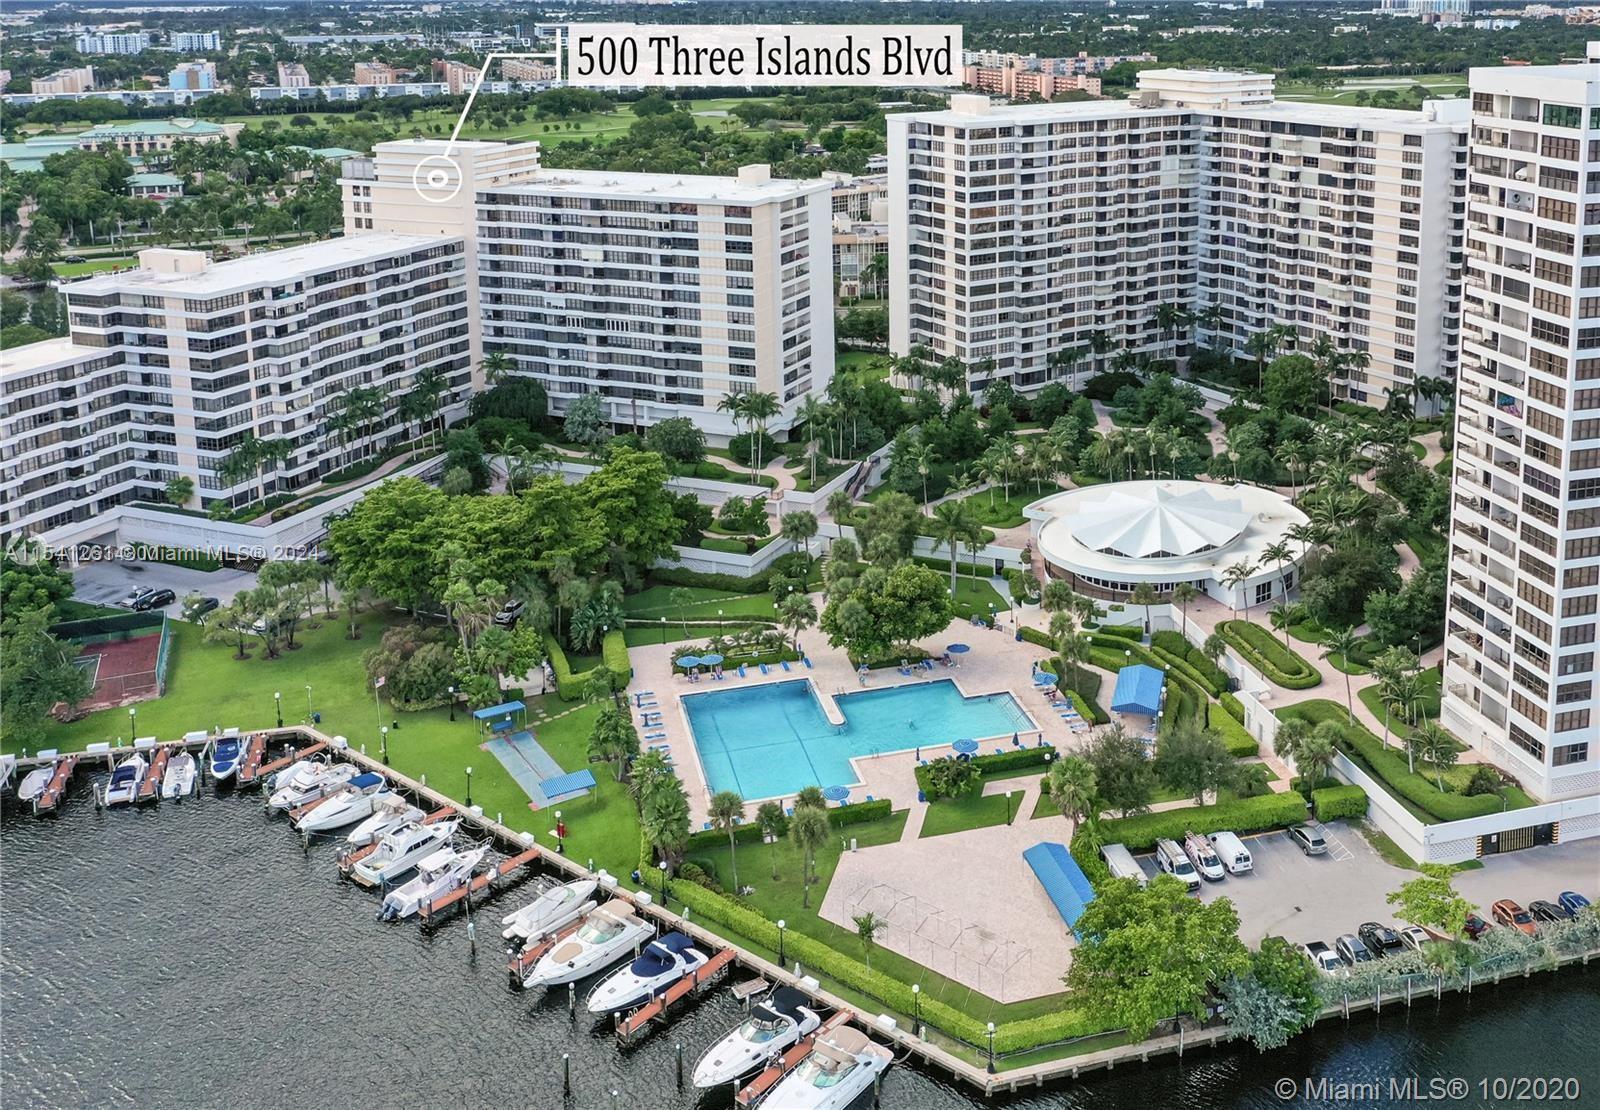 Photo of 500 Three Islands Blvd #1204 in Hallandale Beach, FL